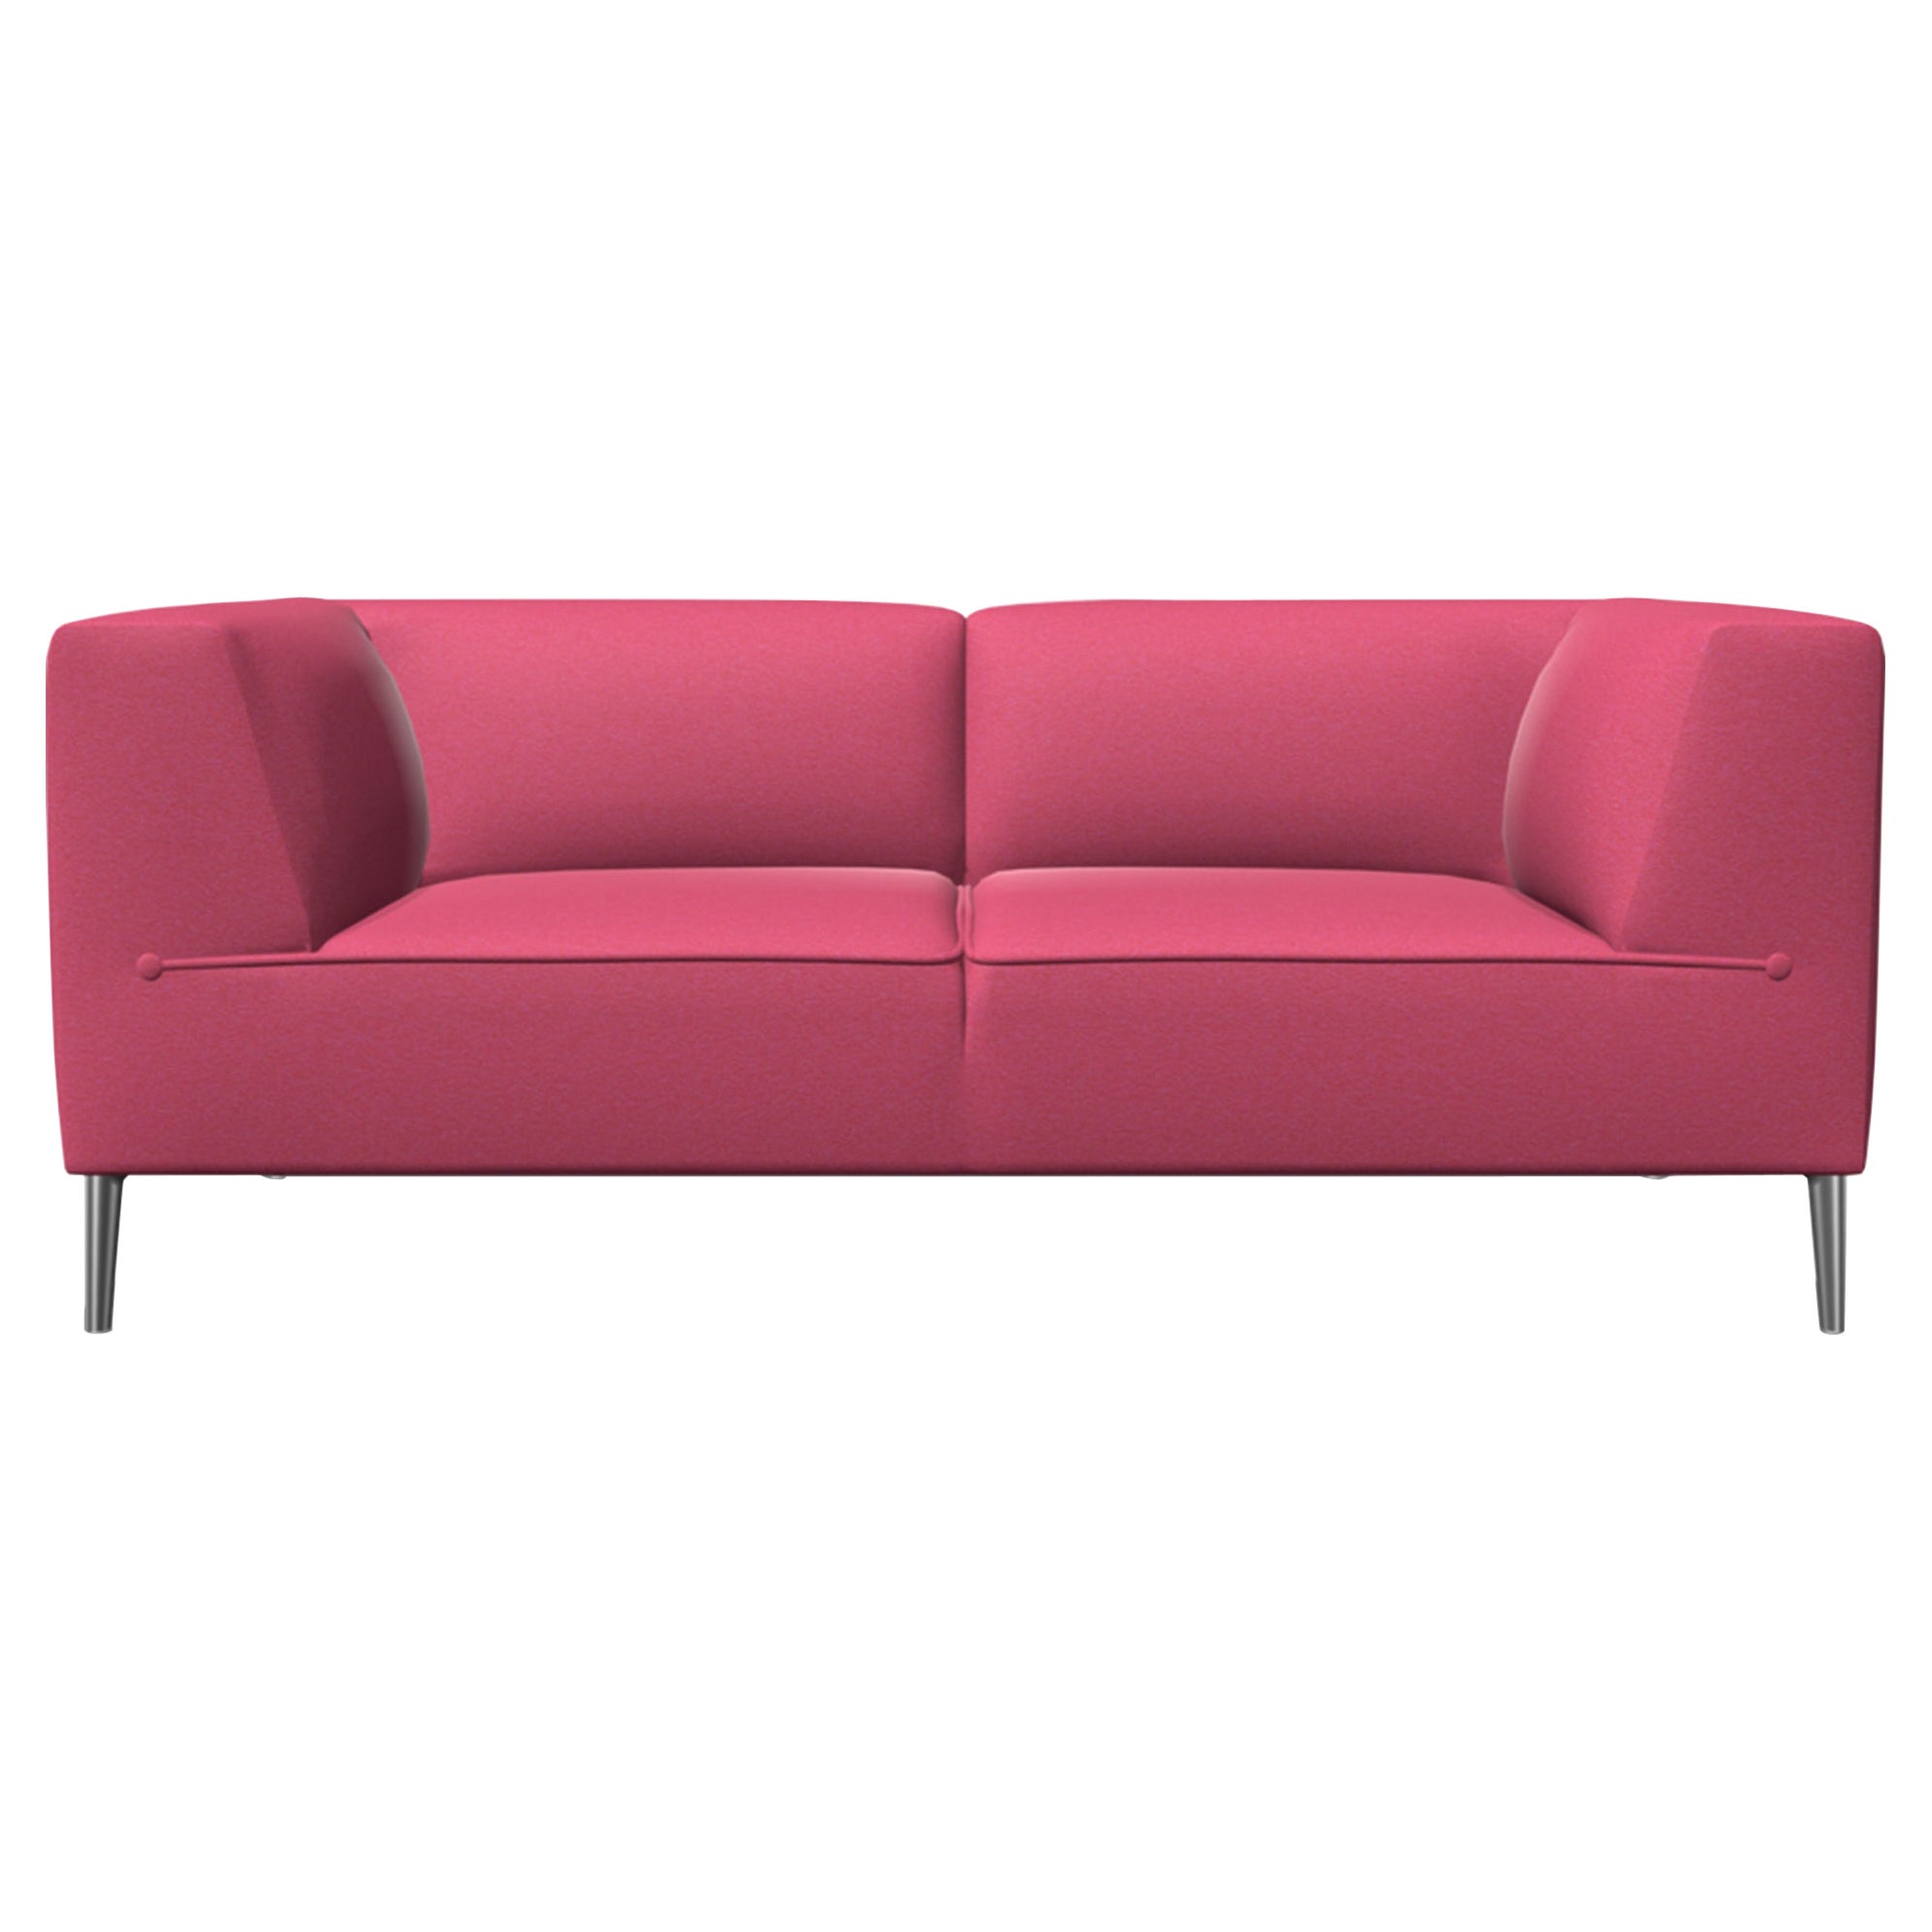 Canapé Moooi à double assise So Good en tissu rose avec pieds en aluminium poli en vente